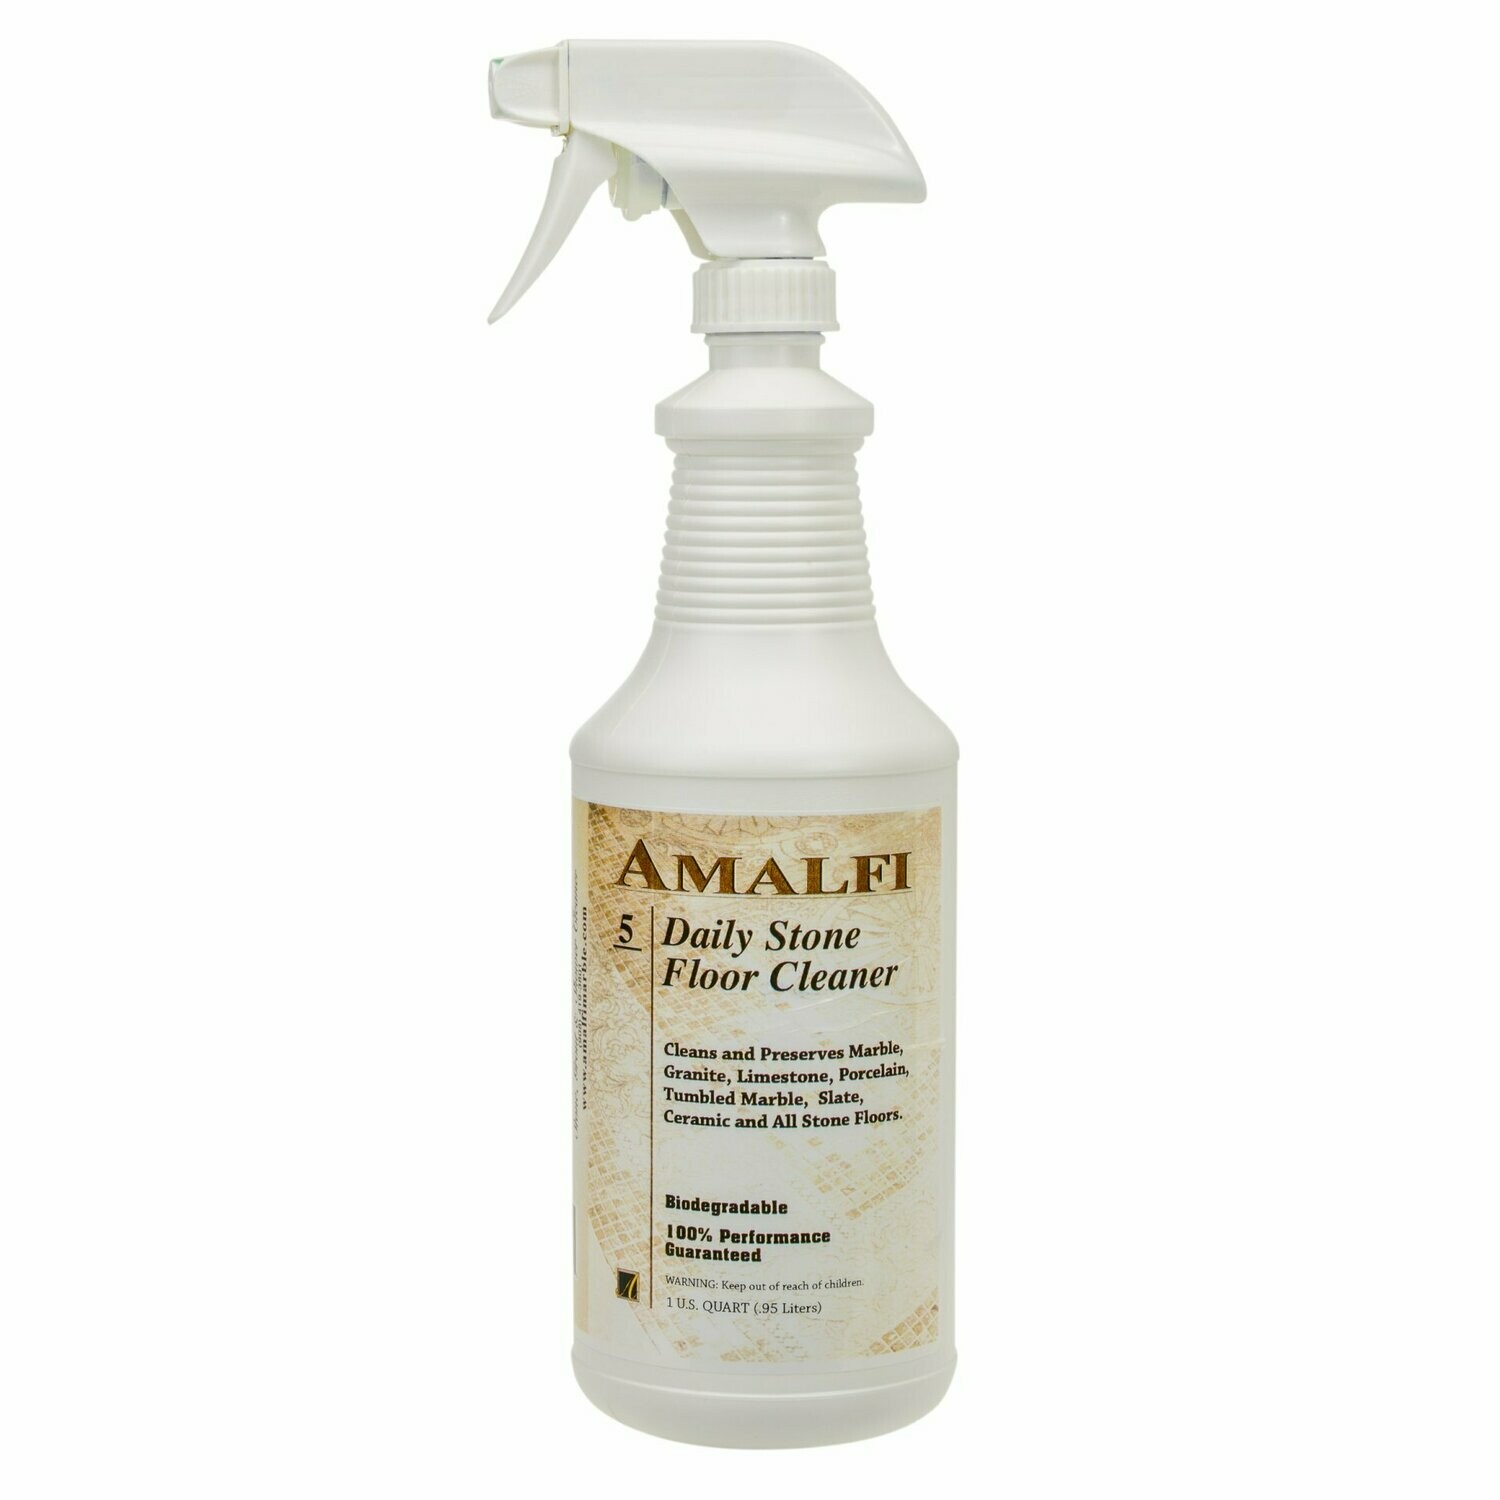 AMALFI 5 Daily Stone Floor Cleaner (case - 12 bottles)